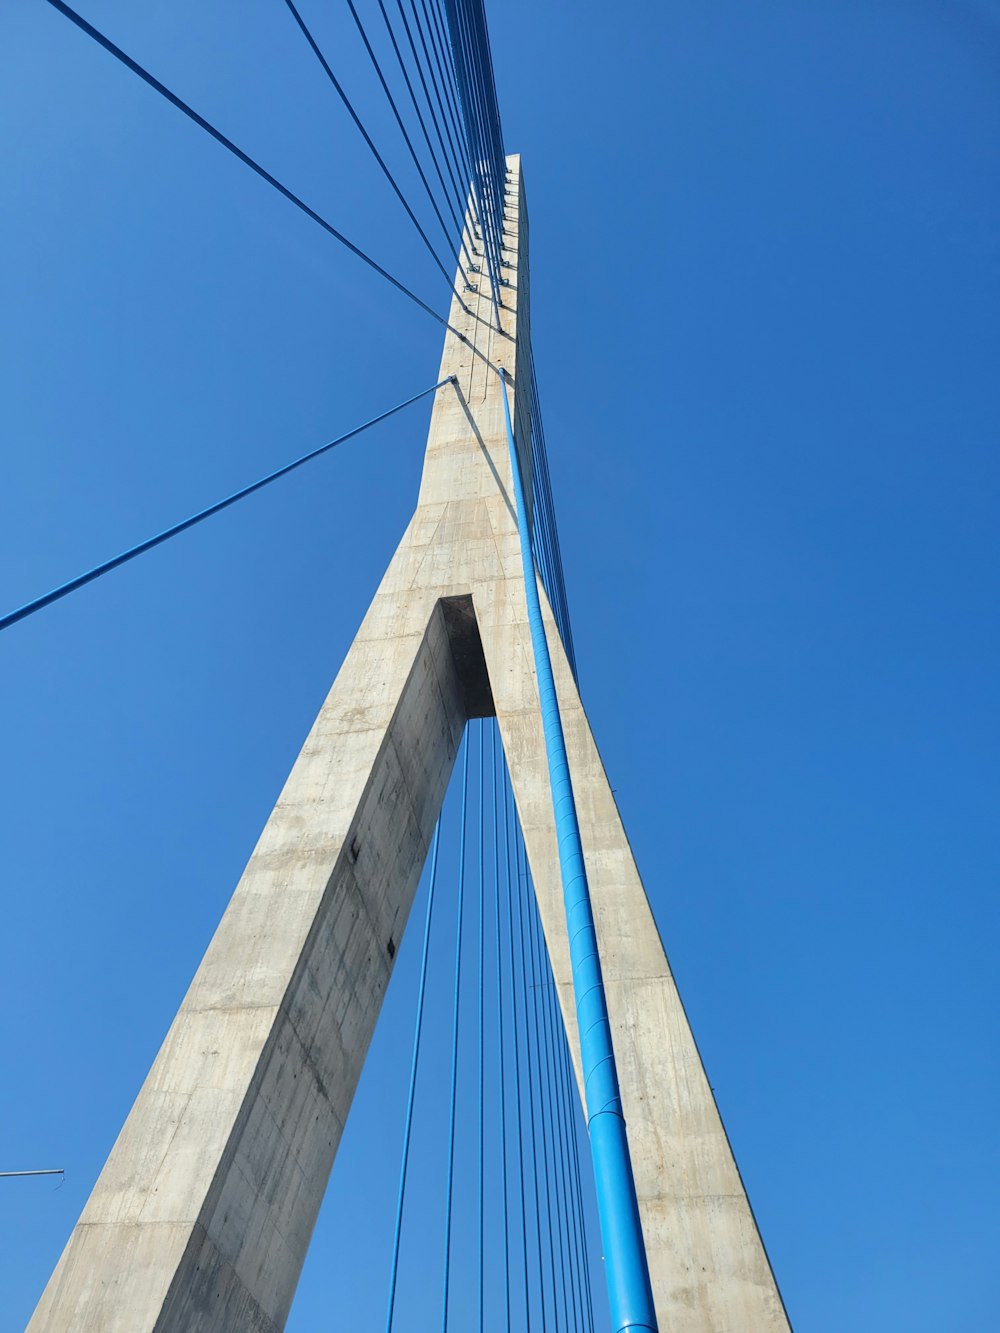 a very tall bridge with a very tall blue pole